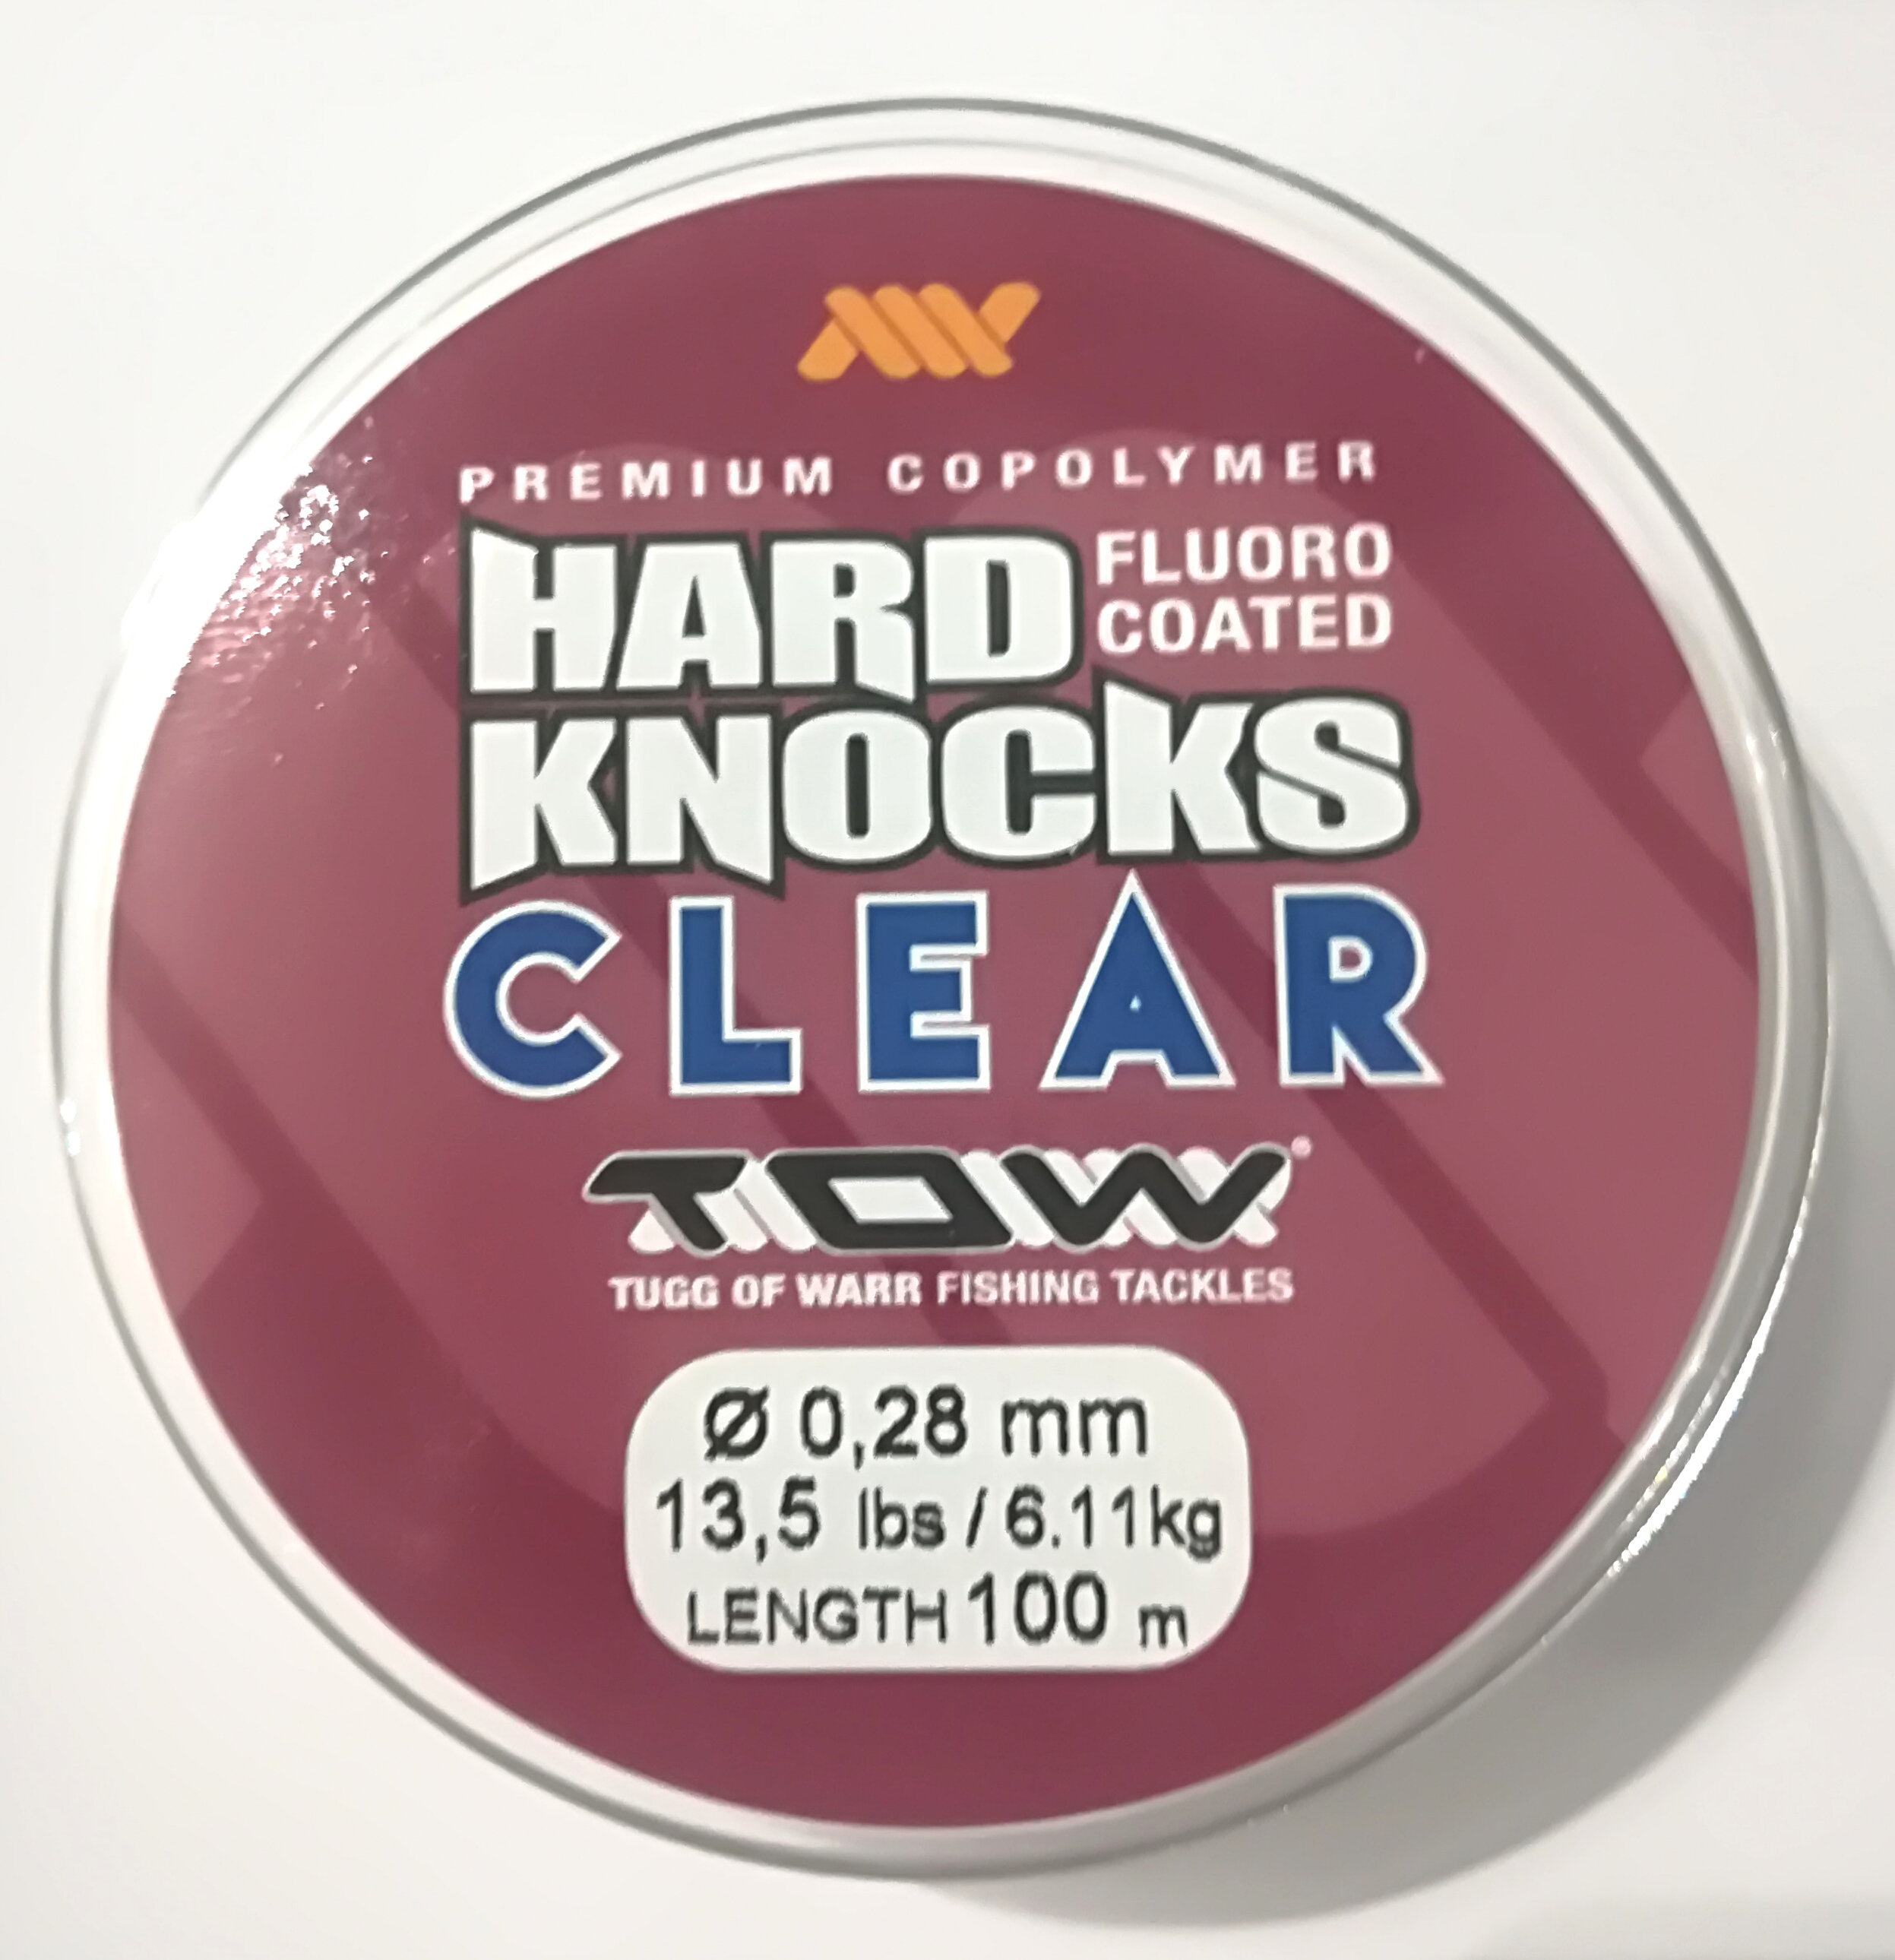 HARD KNOCKS CLEAR fluoro coated